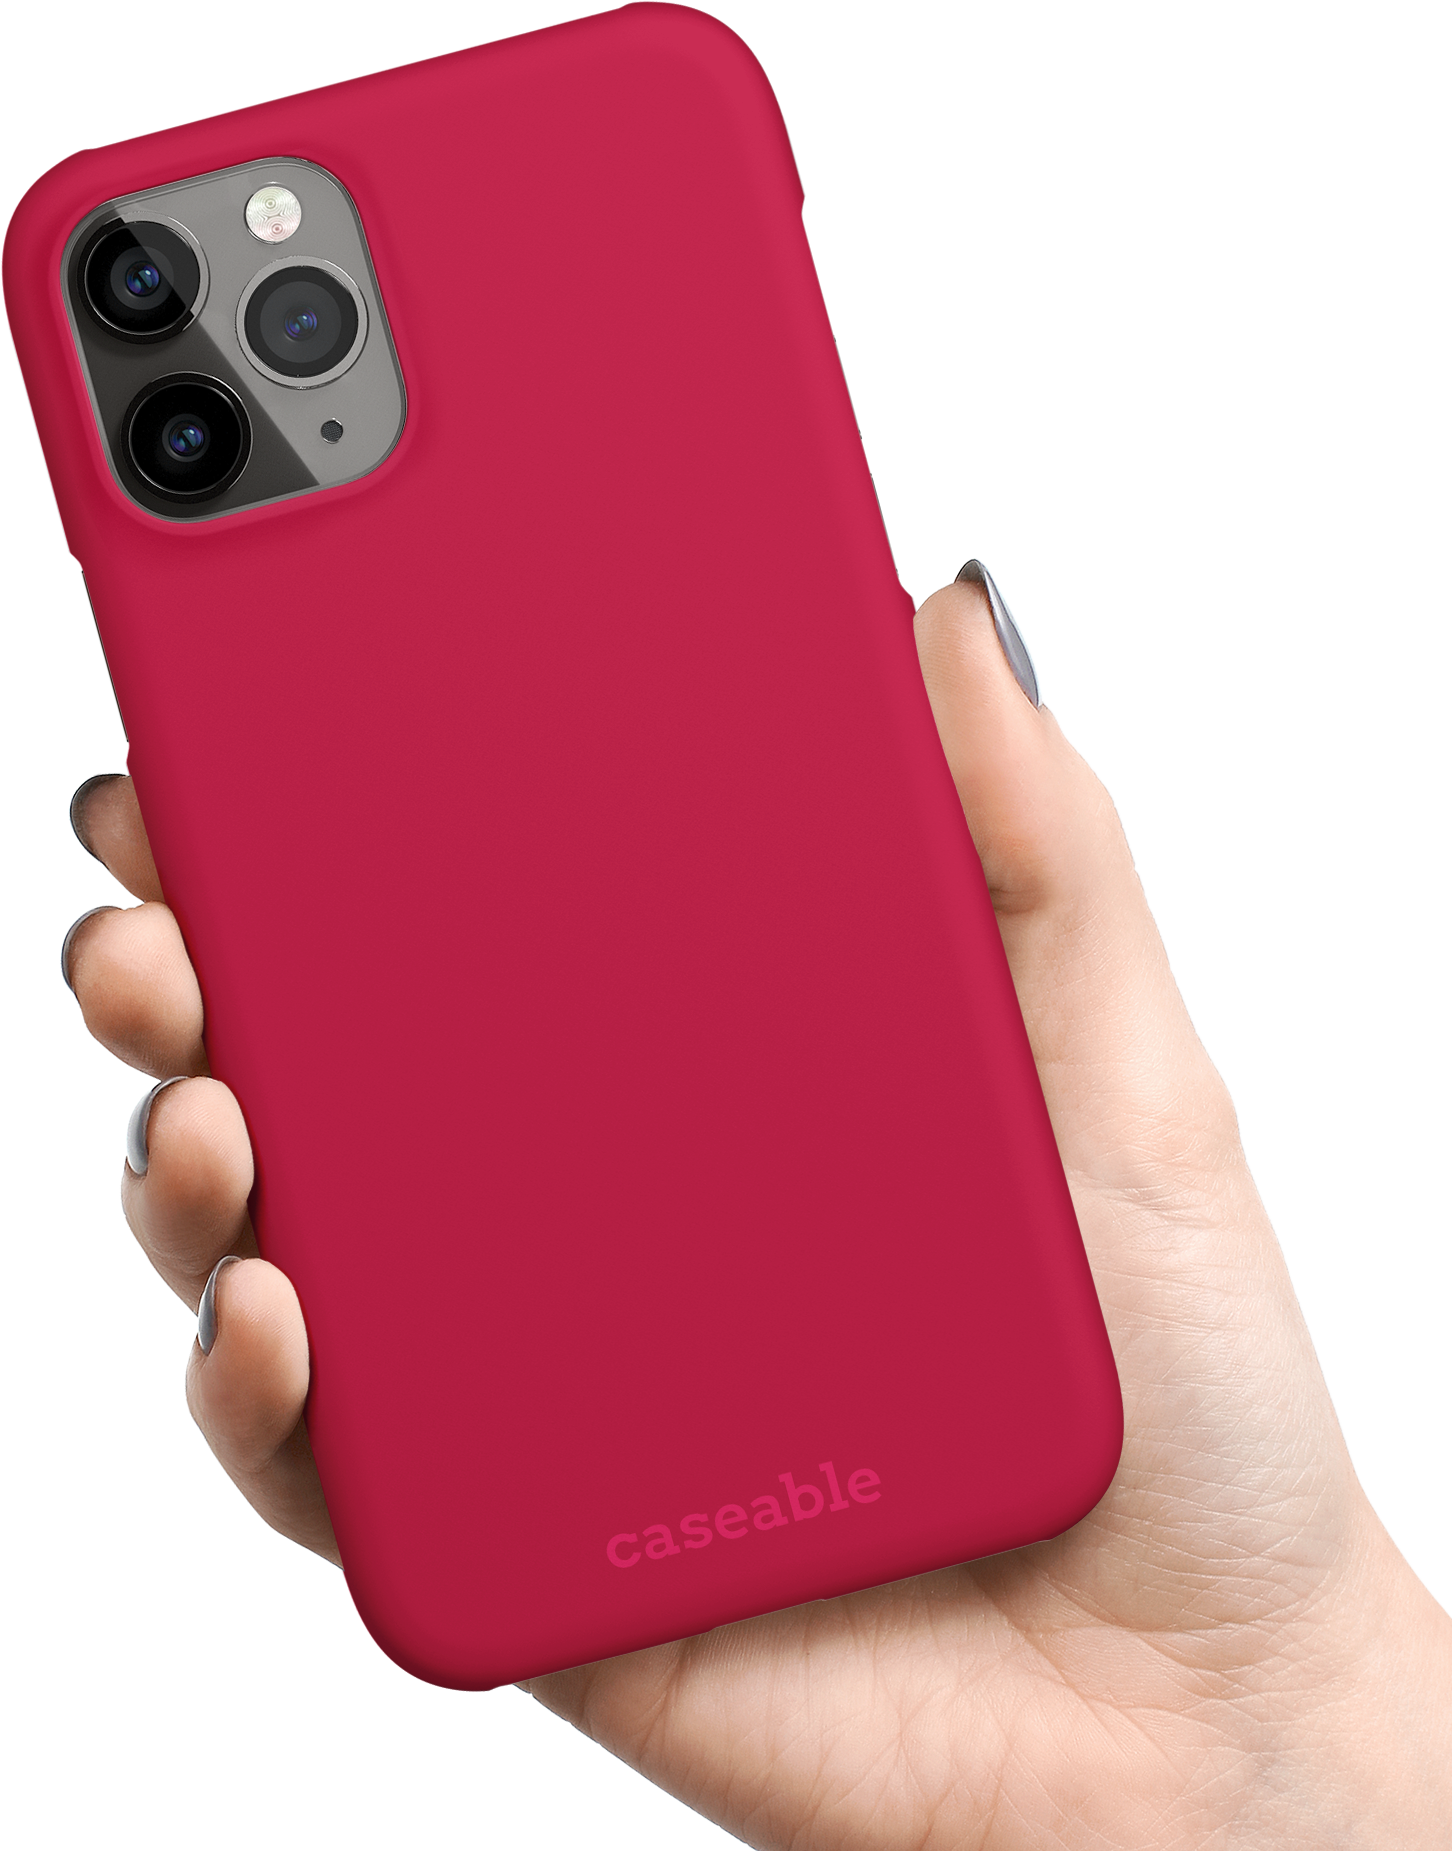 RED Hardcase Handyhülle Apple iPhone 11 Pro in der Hand gehalten